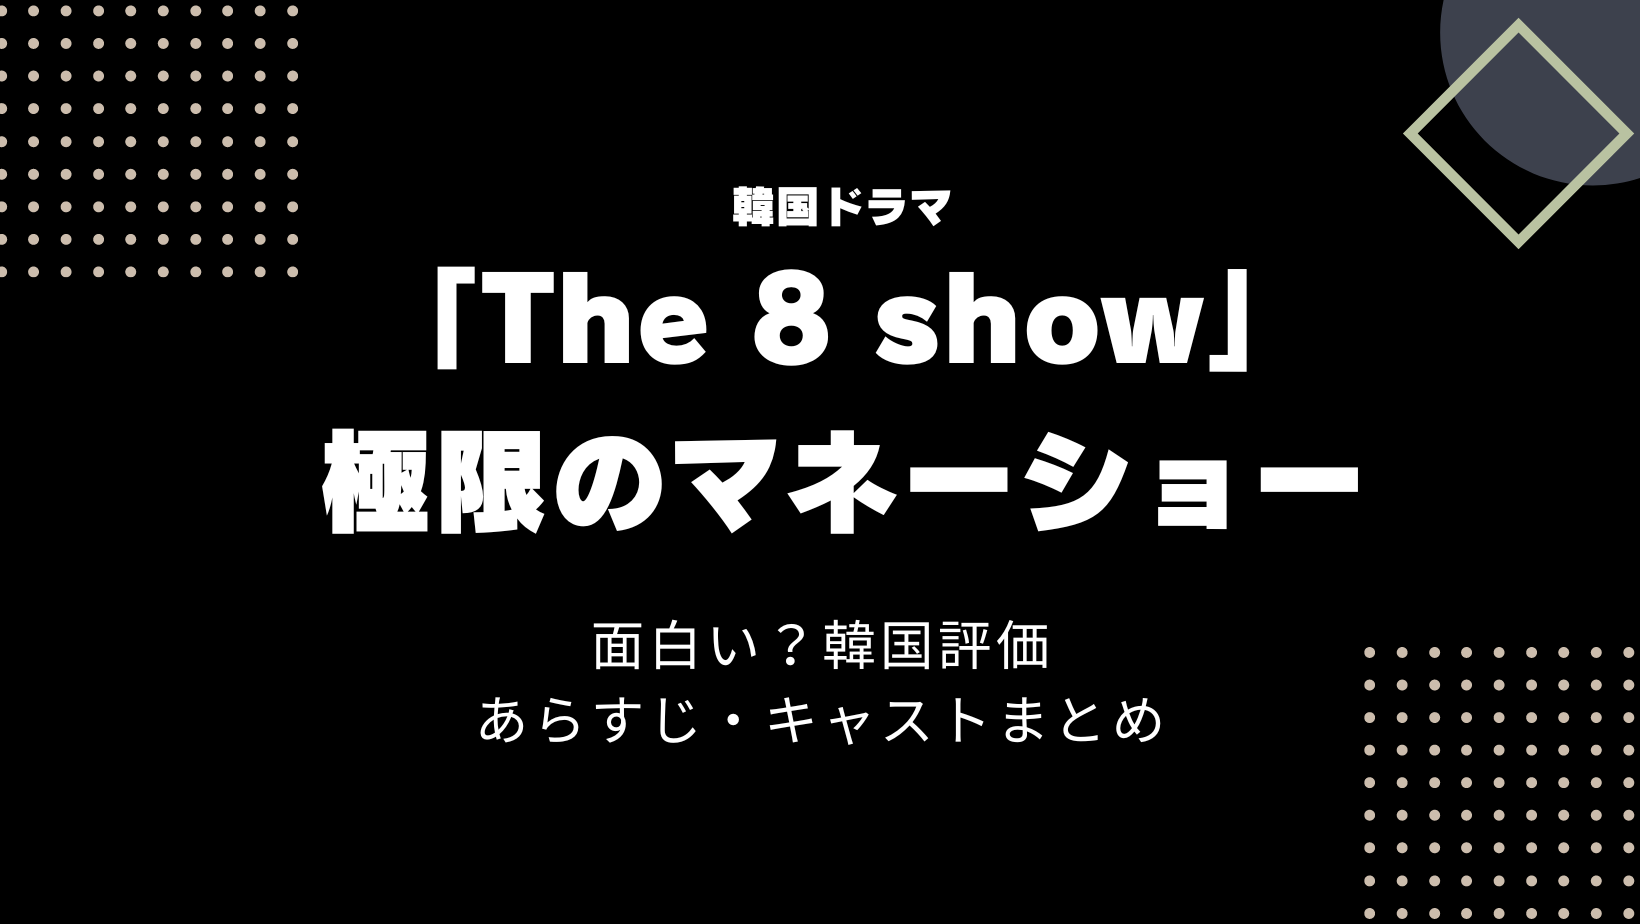 The 8 show 面白い